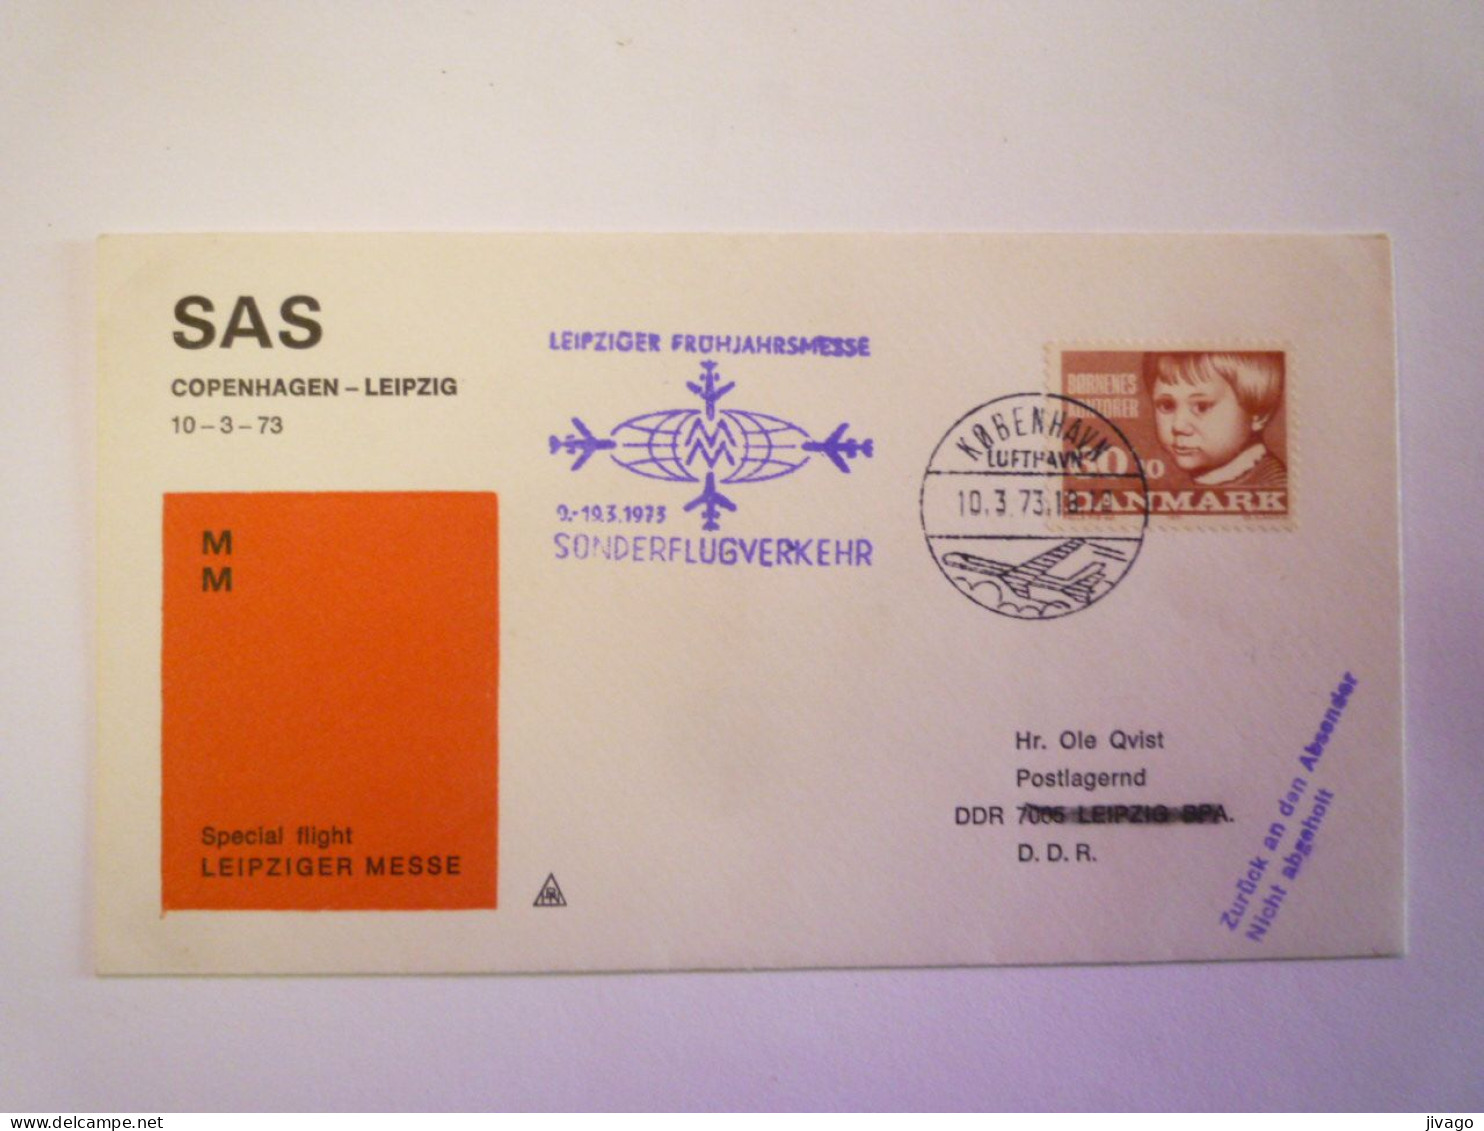 2024 - 609  SAS  COPENHAGEN  -  LEIPZIG  Special Flight  LEIPZIGER MESSE   1973    XXX - Airmail